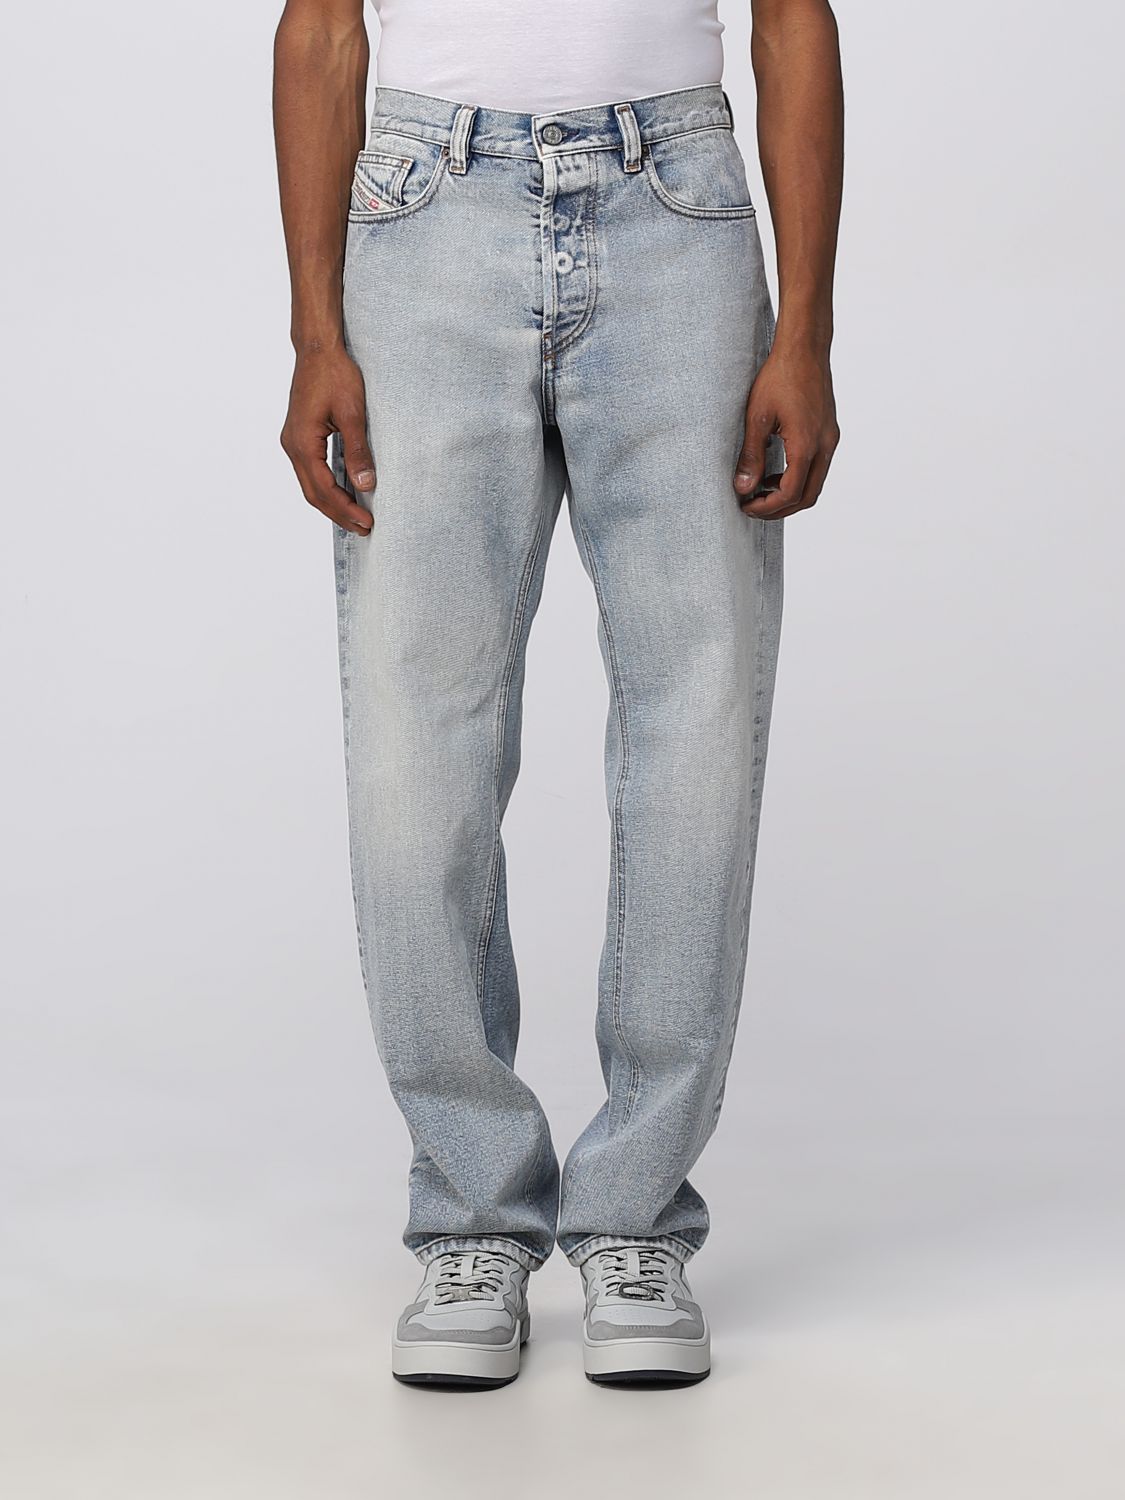 DIESEL: for man - Blue Diesel jeans A0356409C14 online on